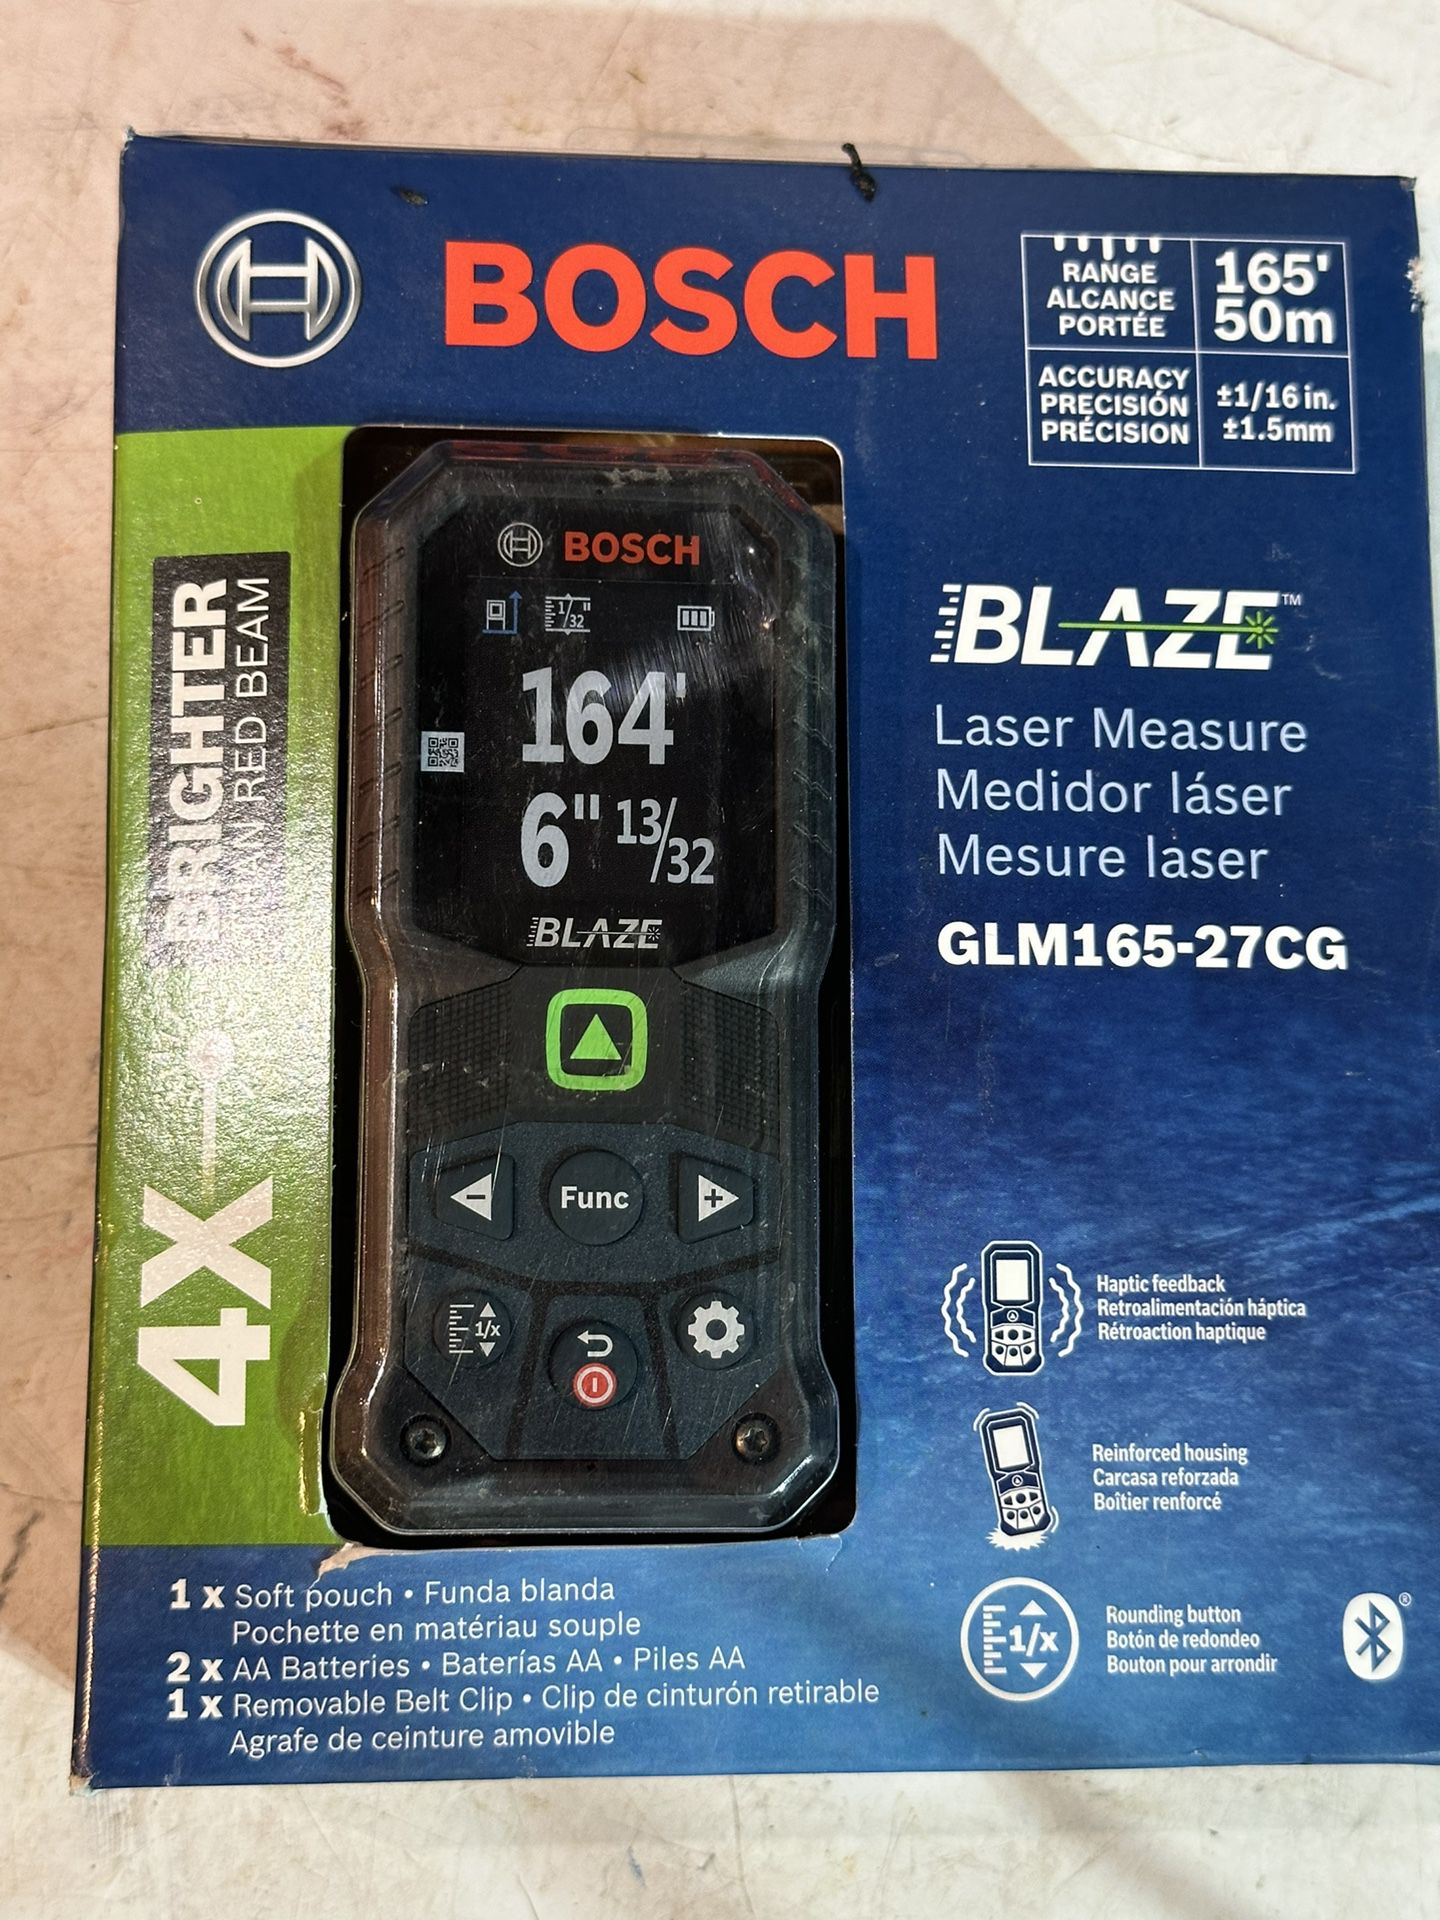 Bosch Green Measure Laser New In Box 80$ 